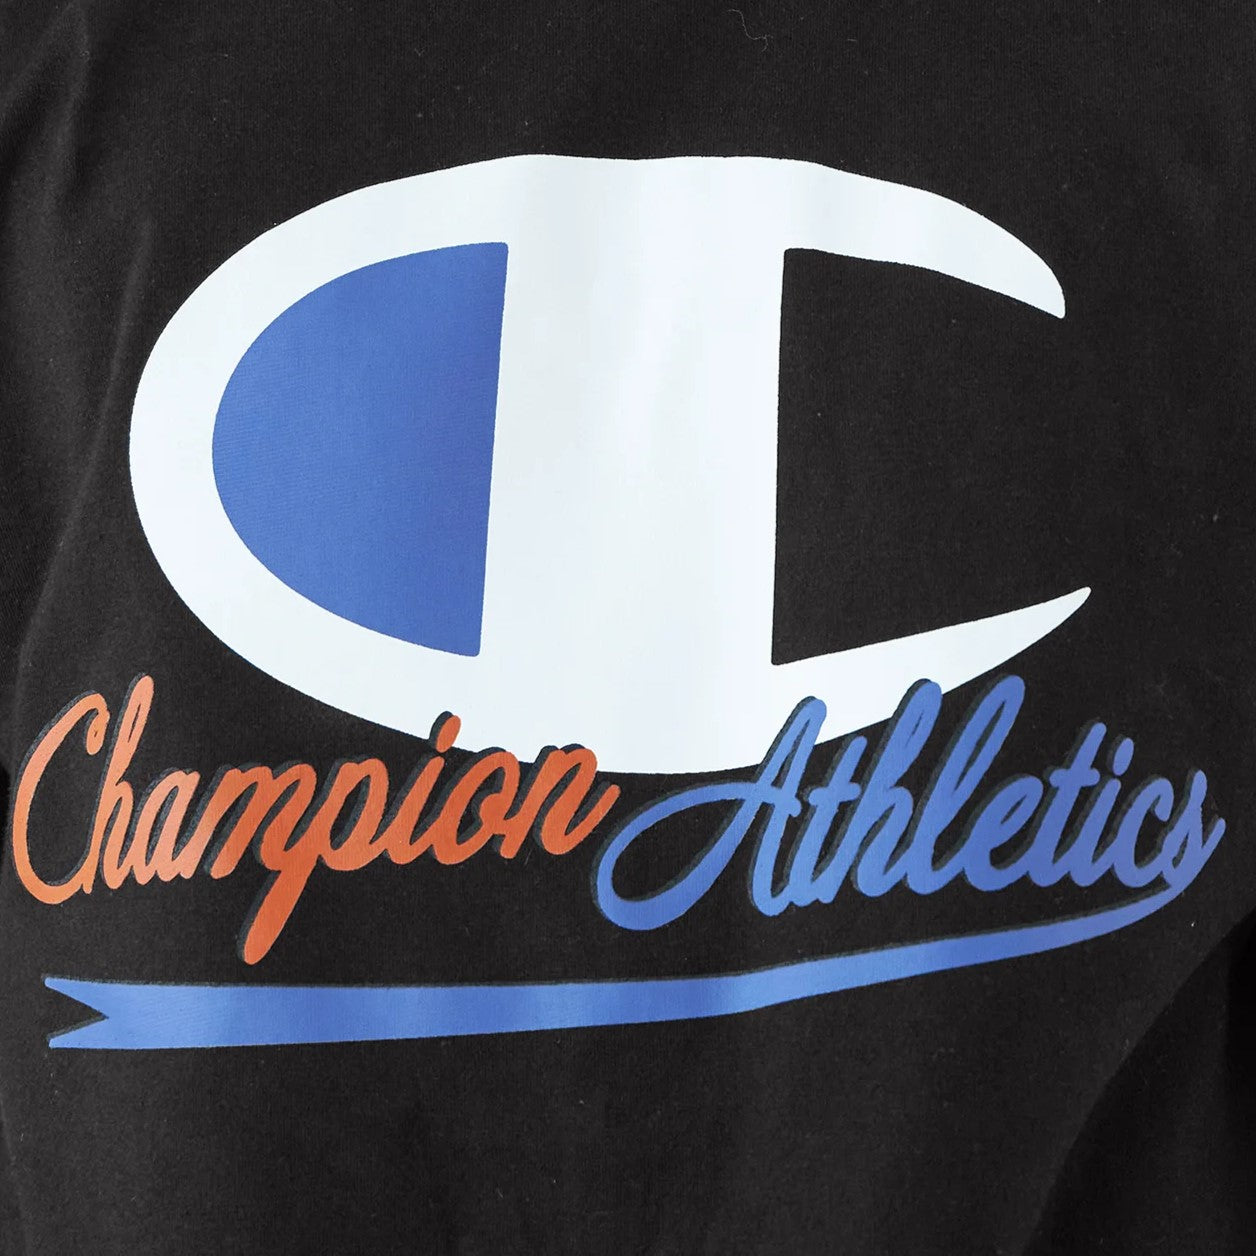 Champion Classic Athletics Logo Graphic T-Shirt - Black